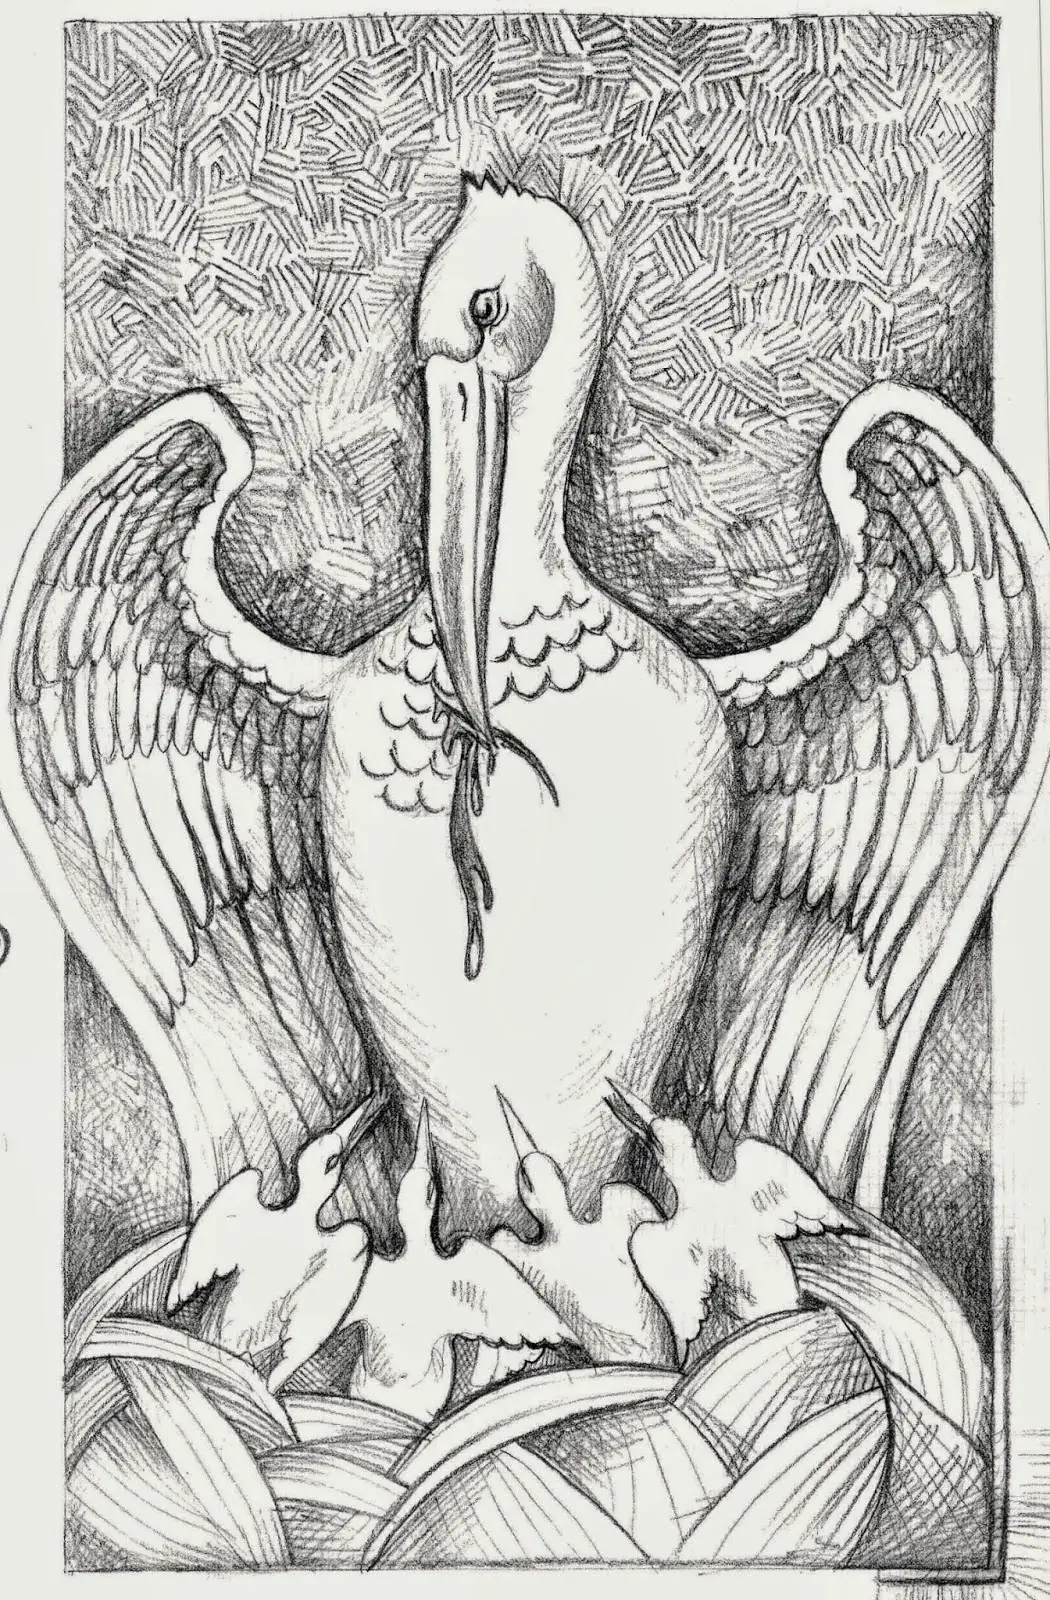 The Pelican As A Symbol In Art